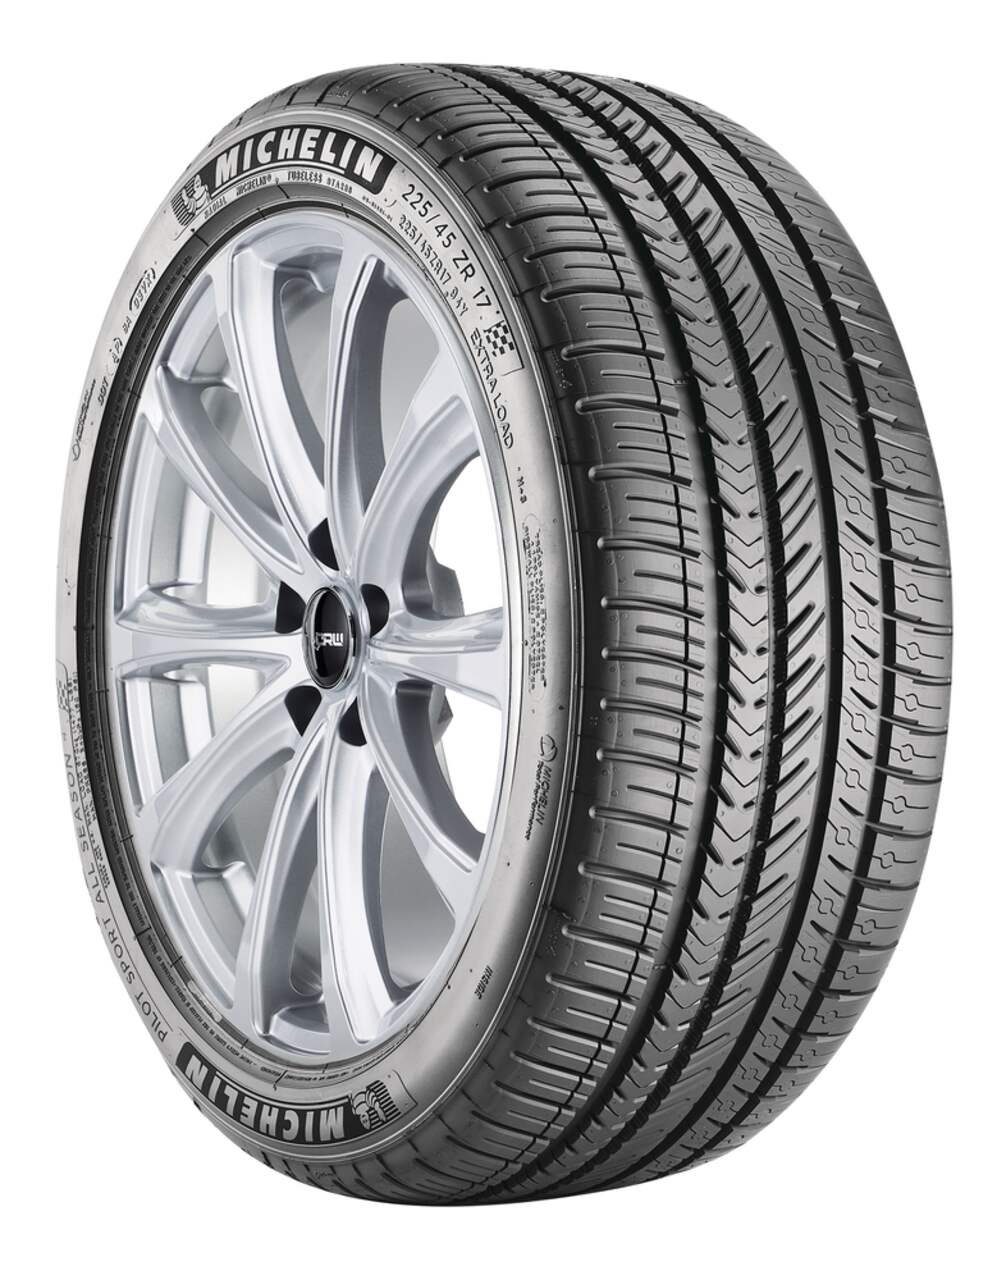 Michelin Pilot Sport A/S 4 Tire | Canadian Tire